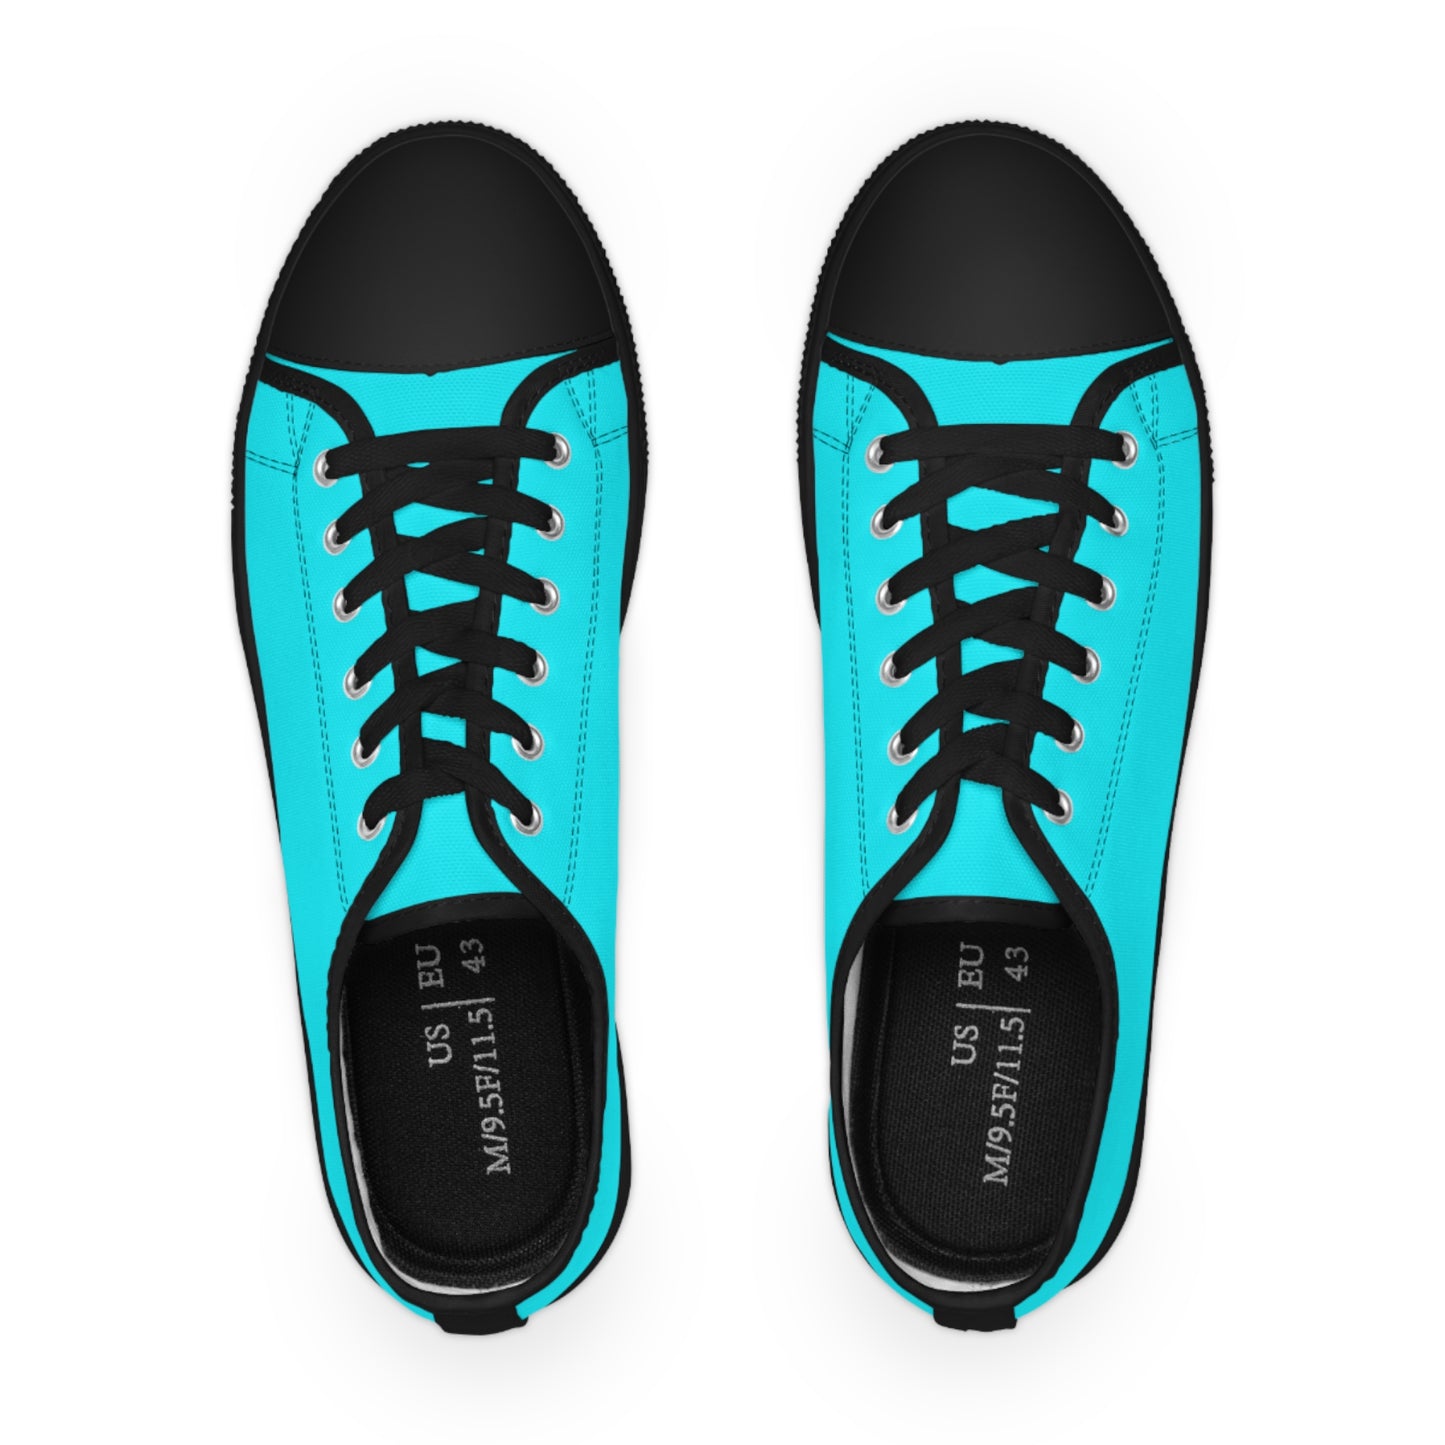 Men's Canvas Low Top Solid Color Sneakers - Cool Pool Aqua Blue US 14 Black sole